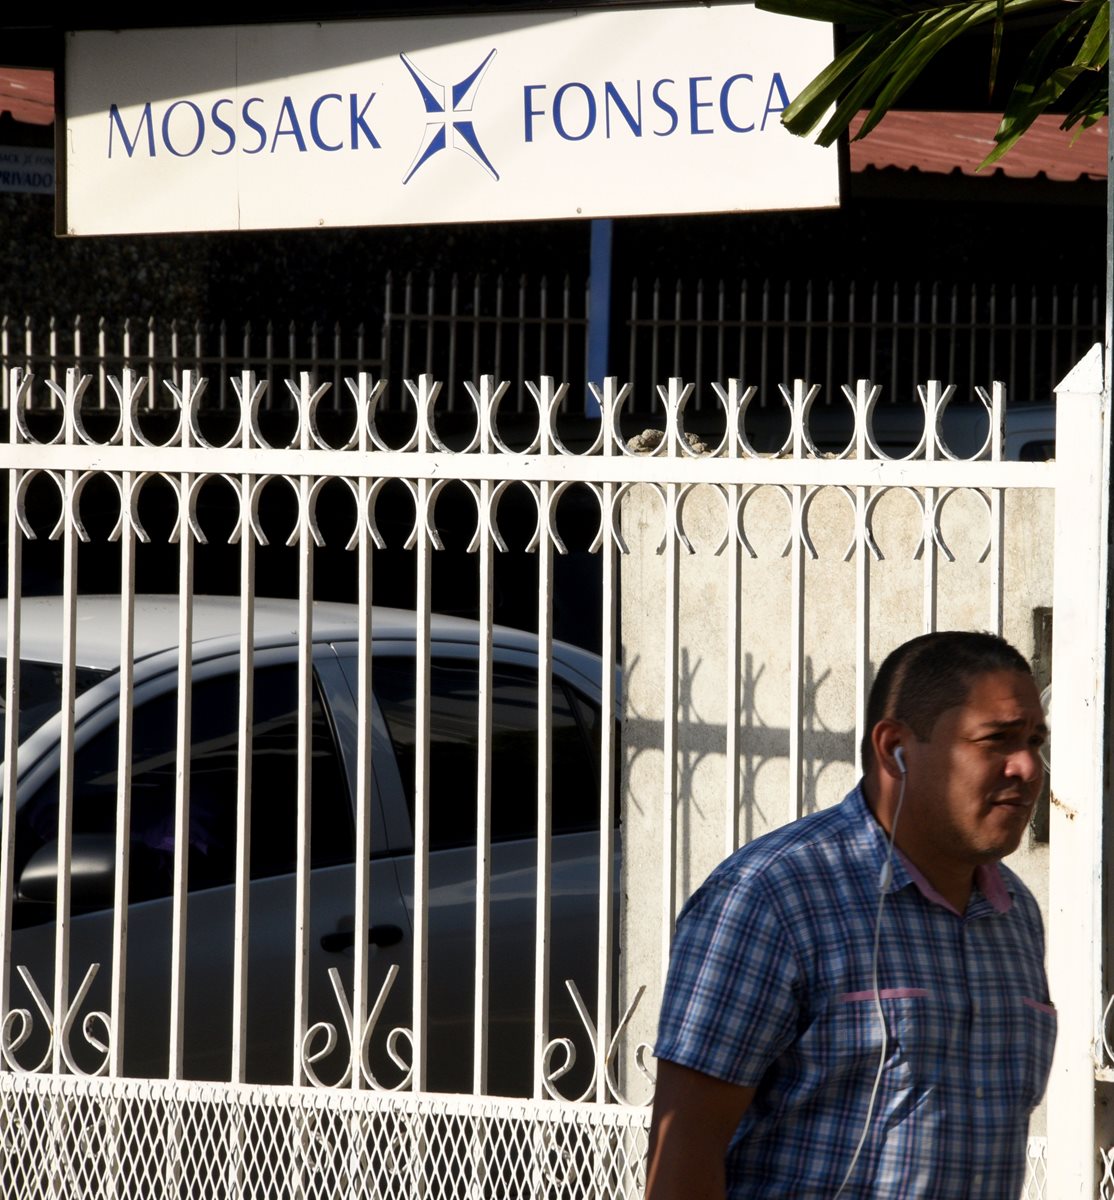 Firma Mossack Fonseca inicia acciones legales por publicación de<em> Panamá Papers</em>